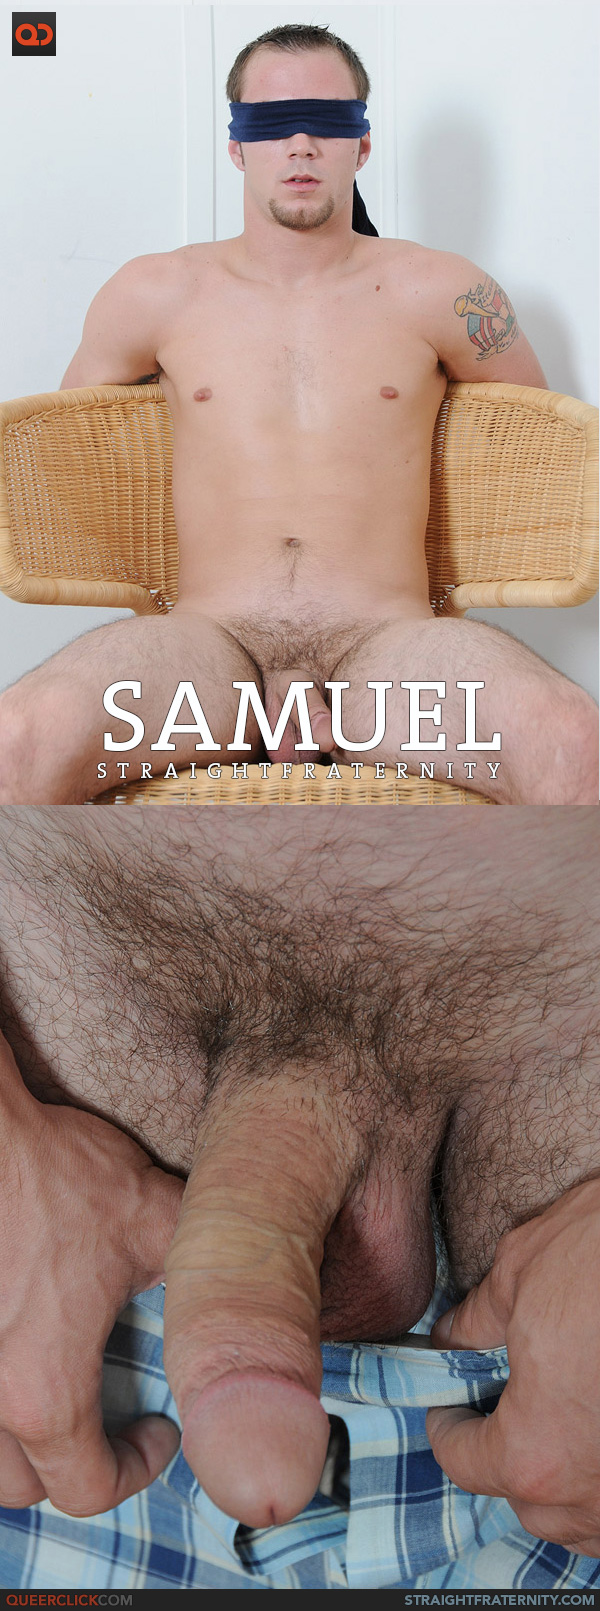 Straight Fraternity: Samuel